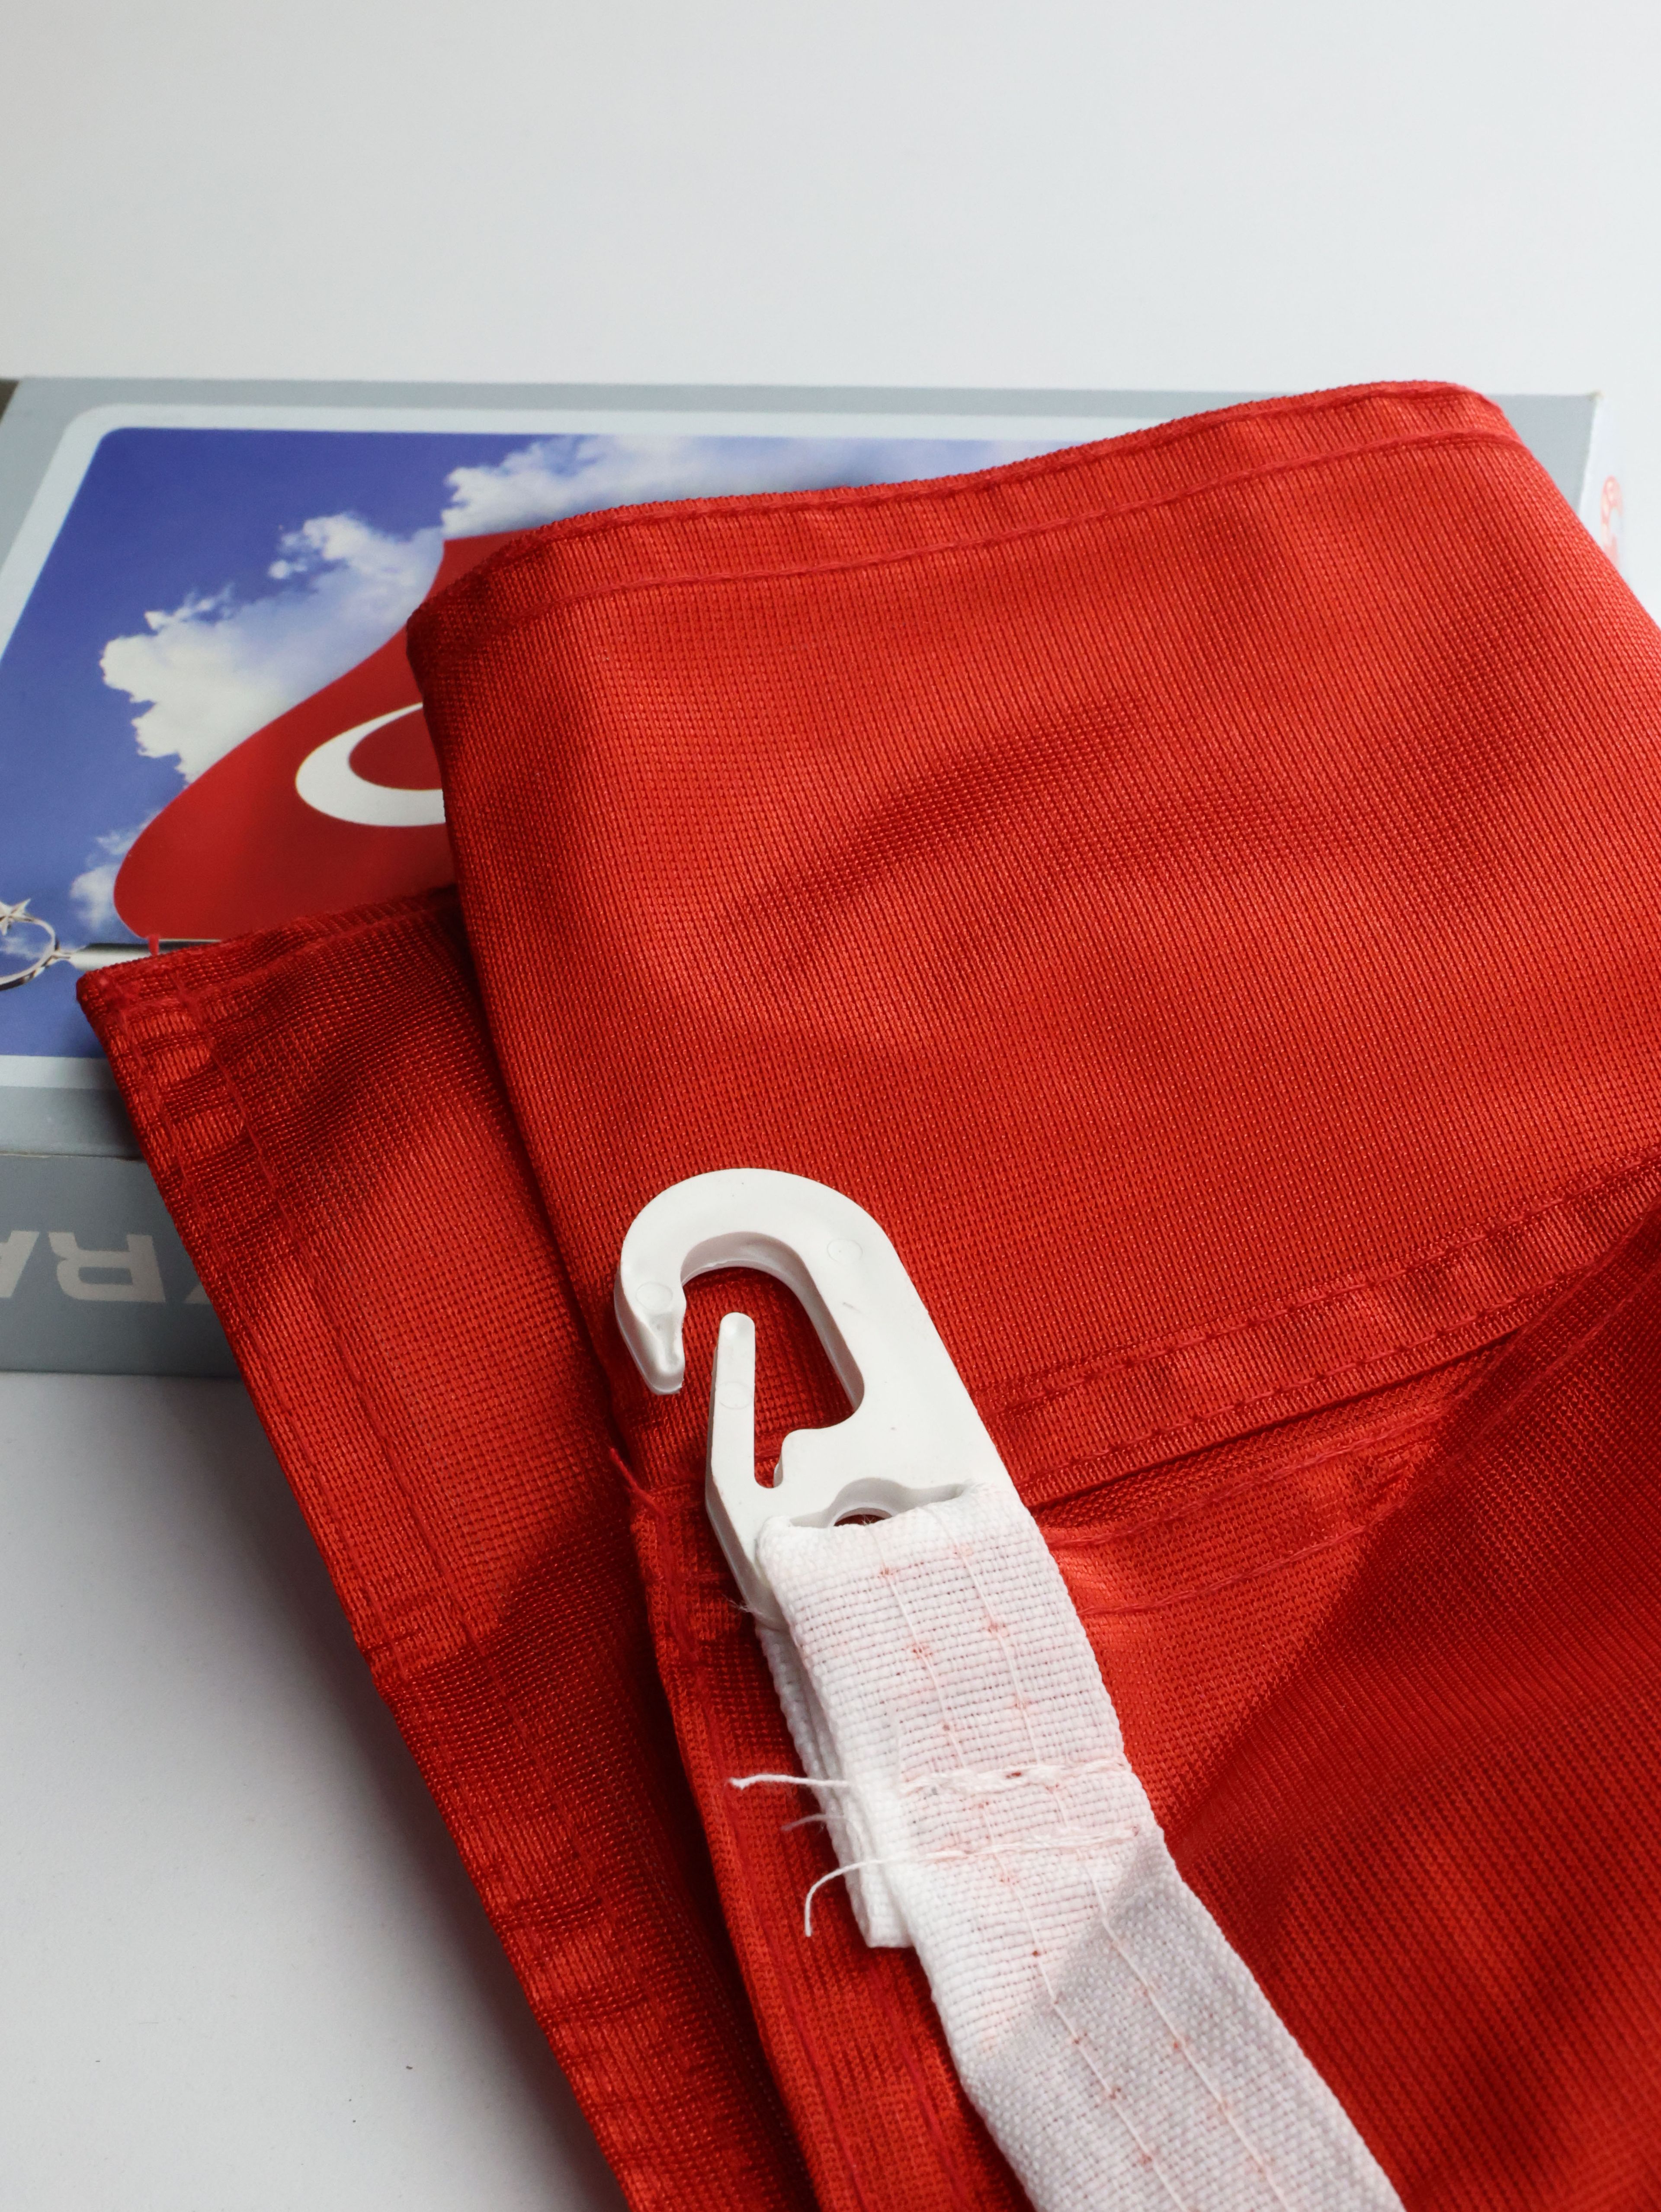 Türk bayrağı 60 x 90 VLP-TRKBYRK02